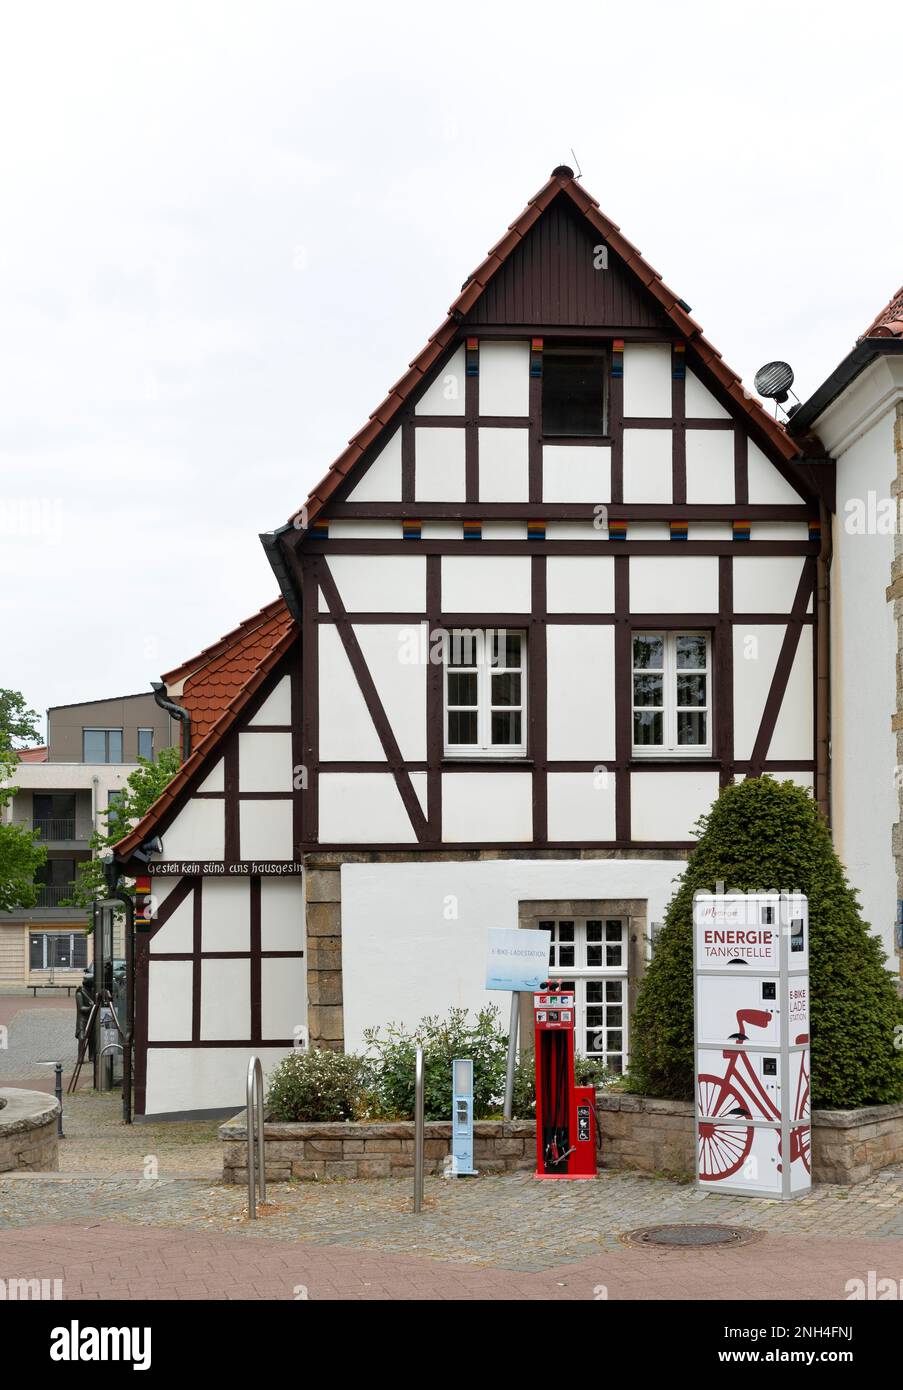 Tueoettenmuseum, former Telsemeyer inn and hotel, Mettingen, Muensterland, North Rhine-Westphalia, Germany Stock Photo